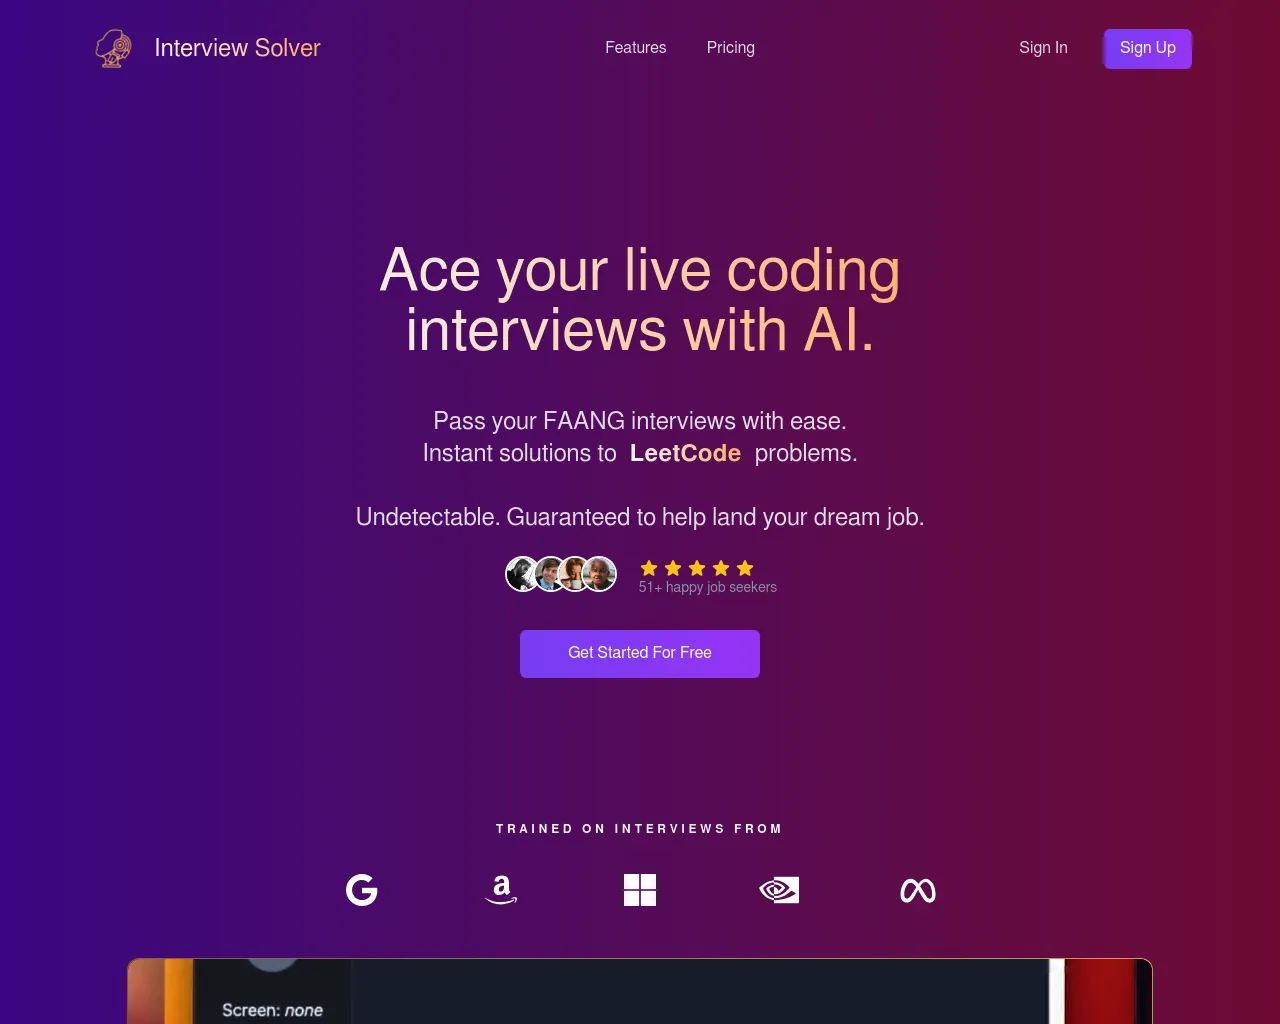 Ace your live coding interviews with our AI Copilot